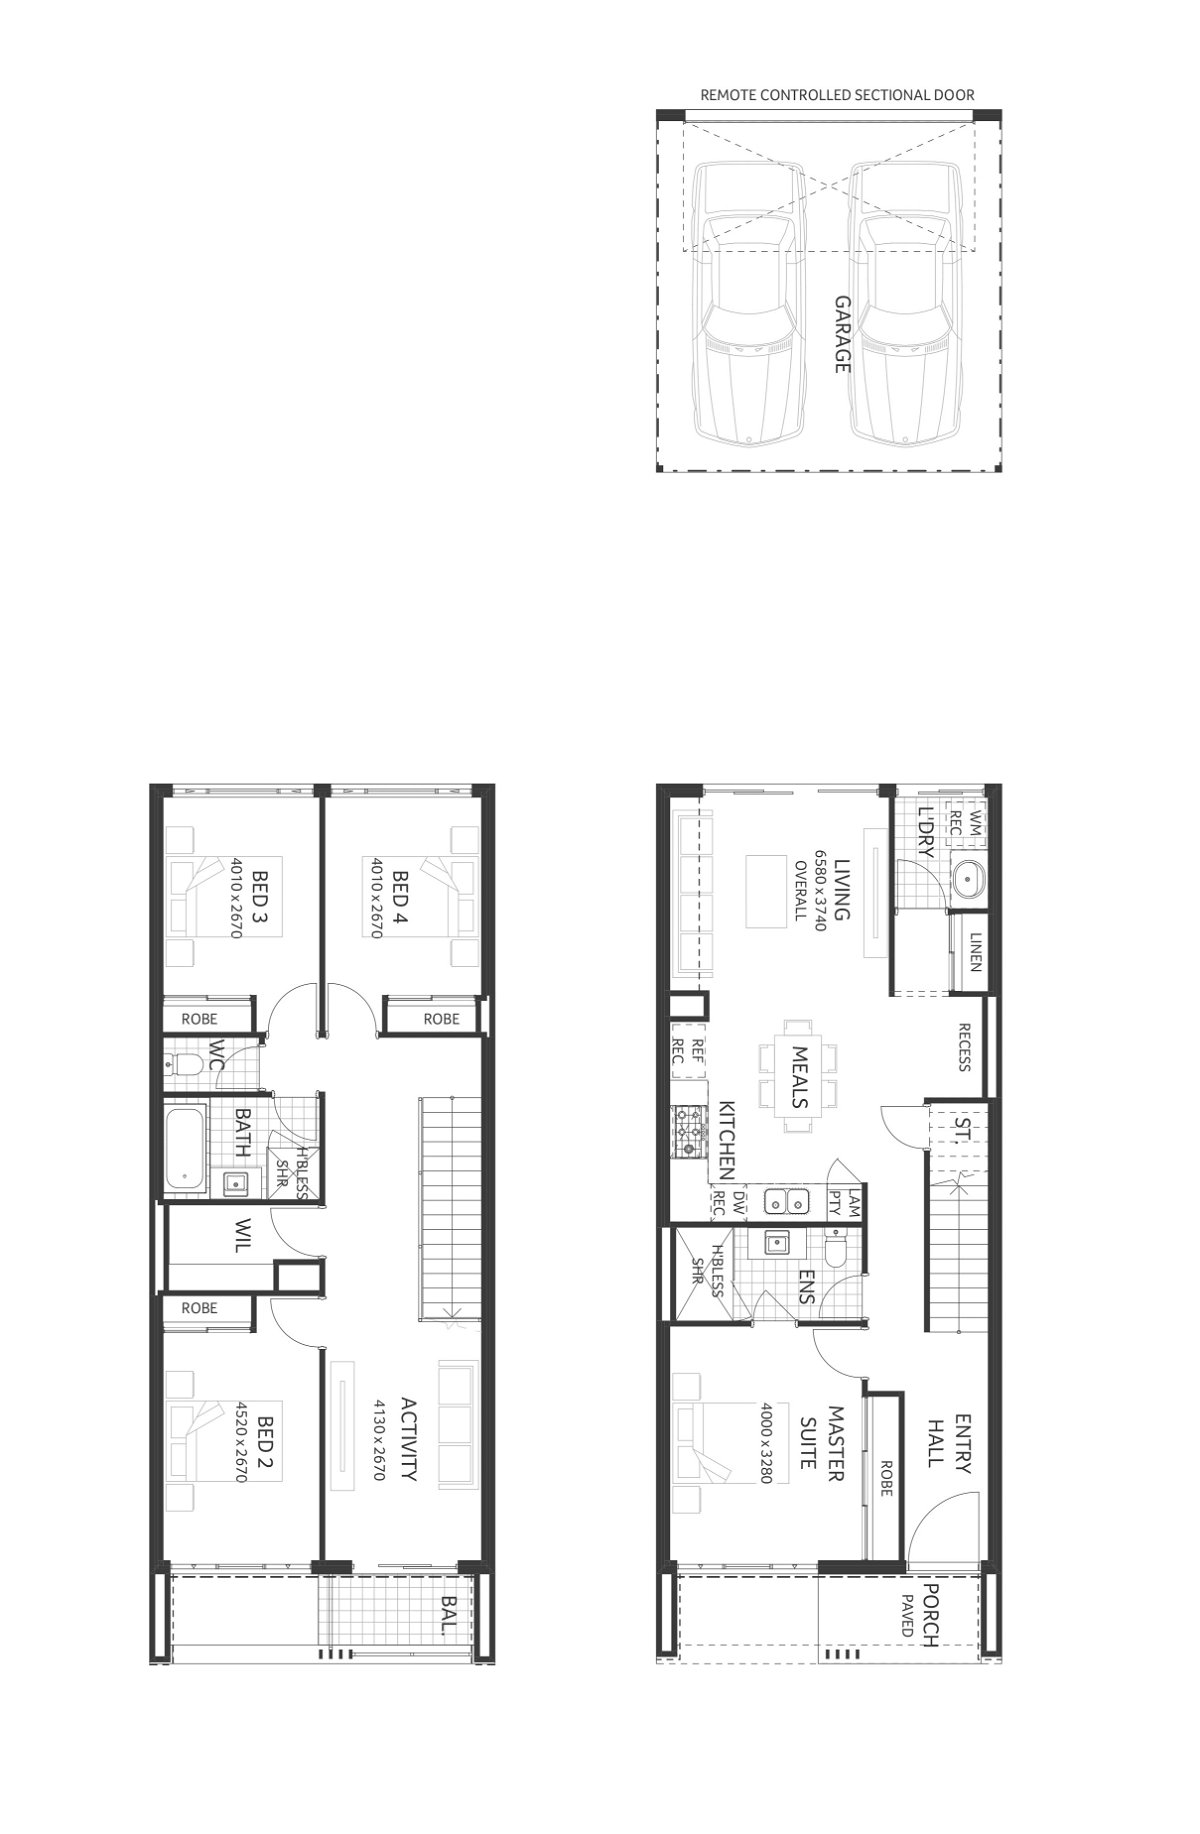 Plunkett Homes - Melrose | Contemporary - Floorplan - Melrose Luxe Contemporary Website Floorplan 2